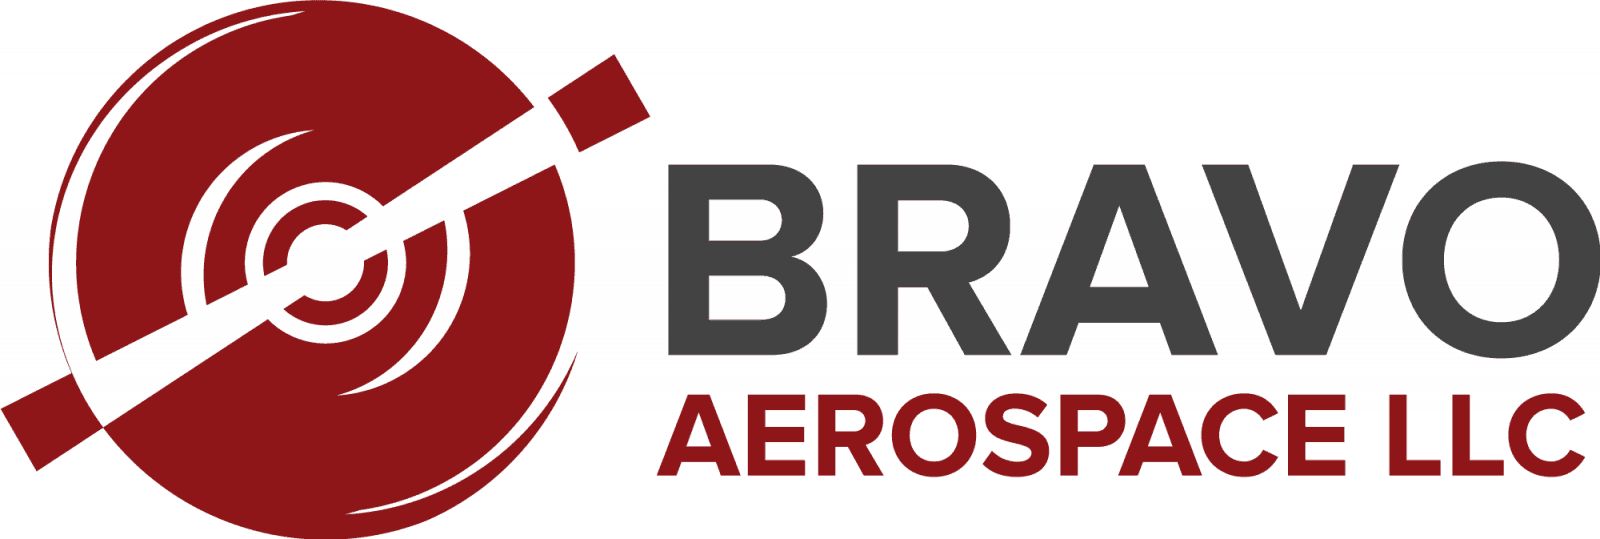 Transparent-BG-BRAVO-AEROSPACE-LLC-Red-2.png